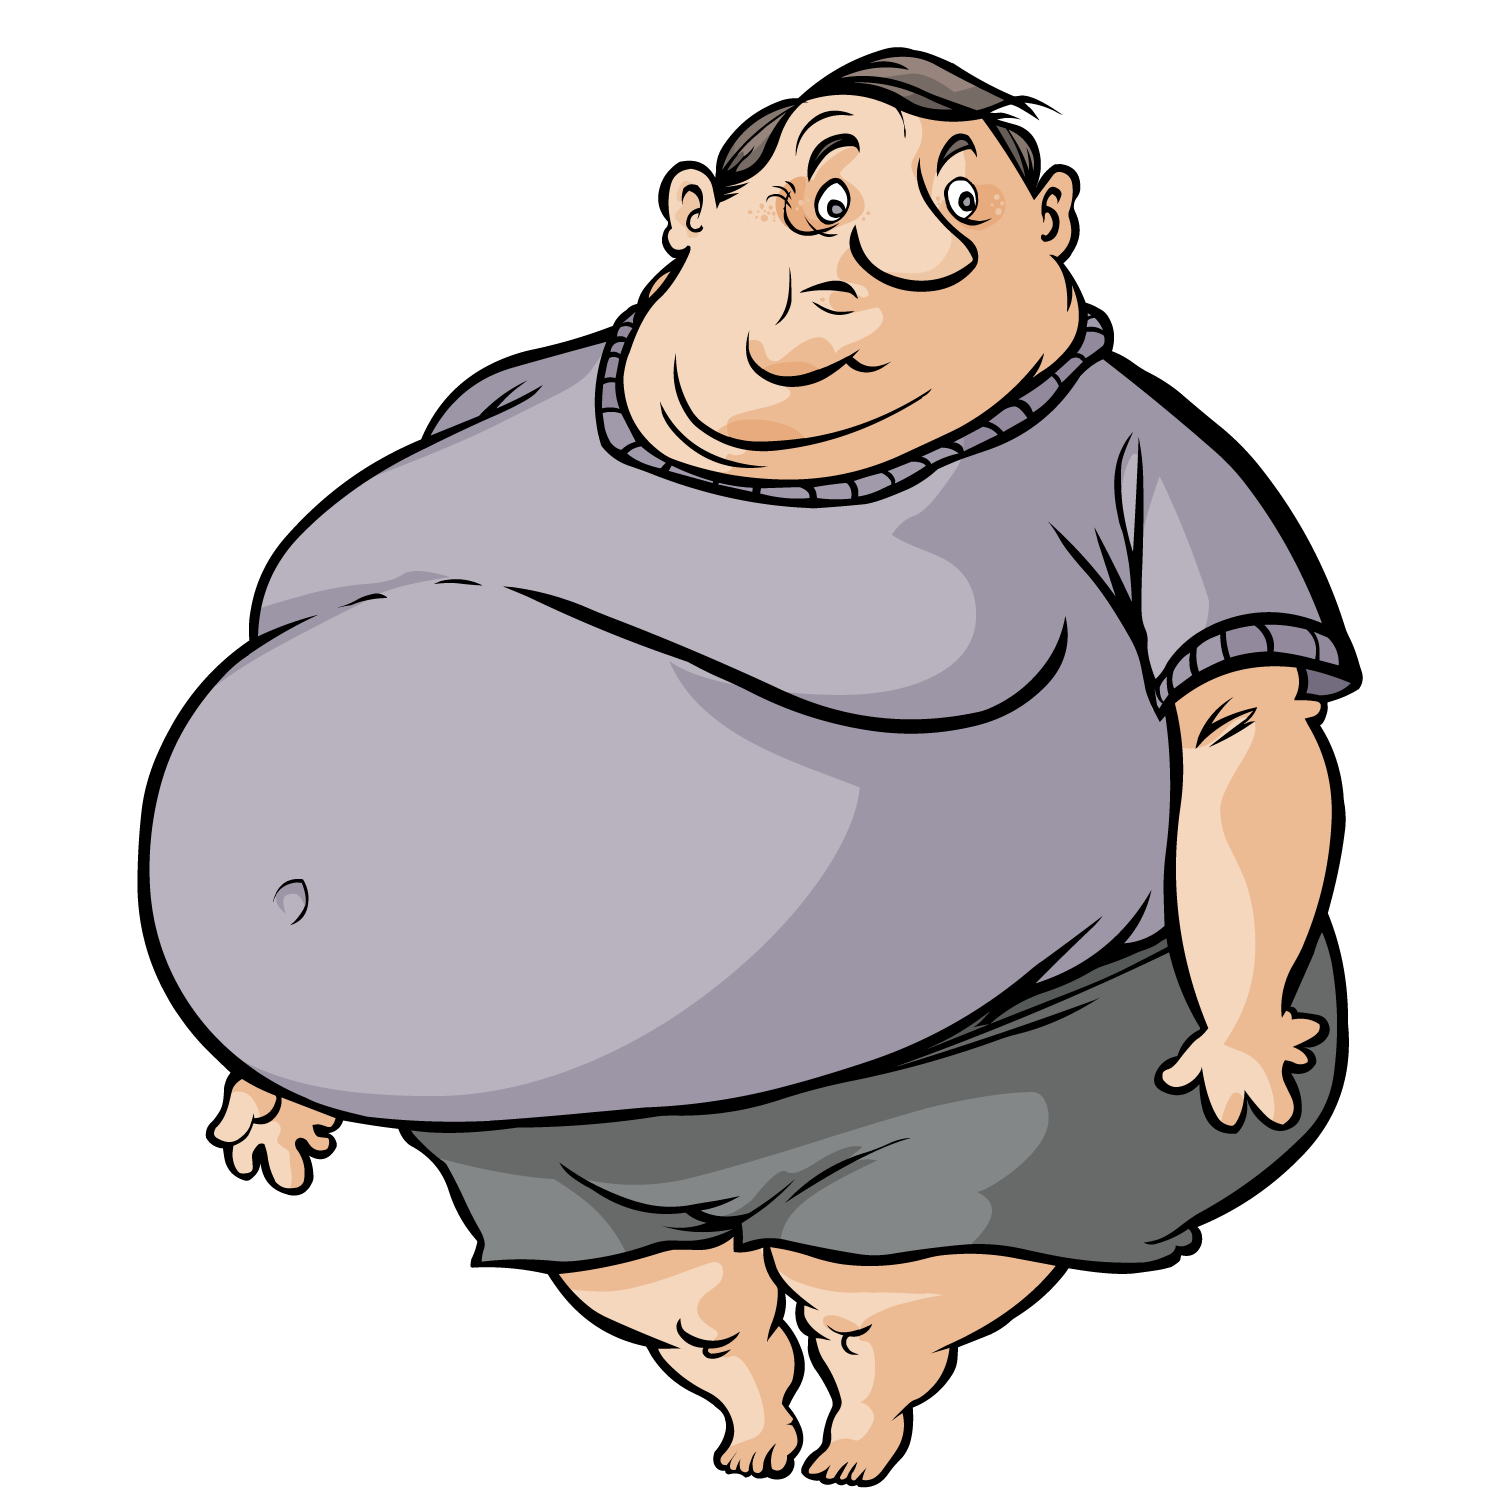 Cute Cartoon Fat Man Free Transparent Image HQ PNG Clipart from Cartoon Car...